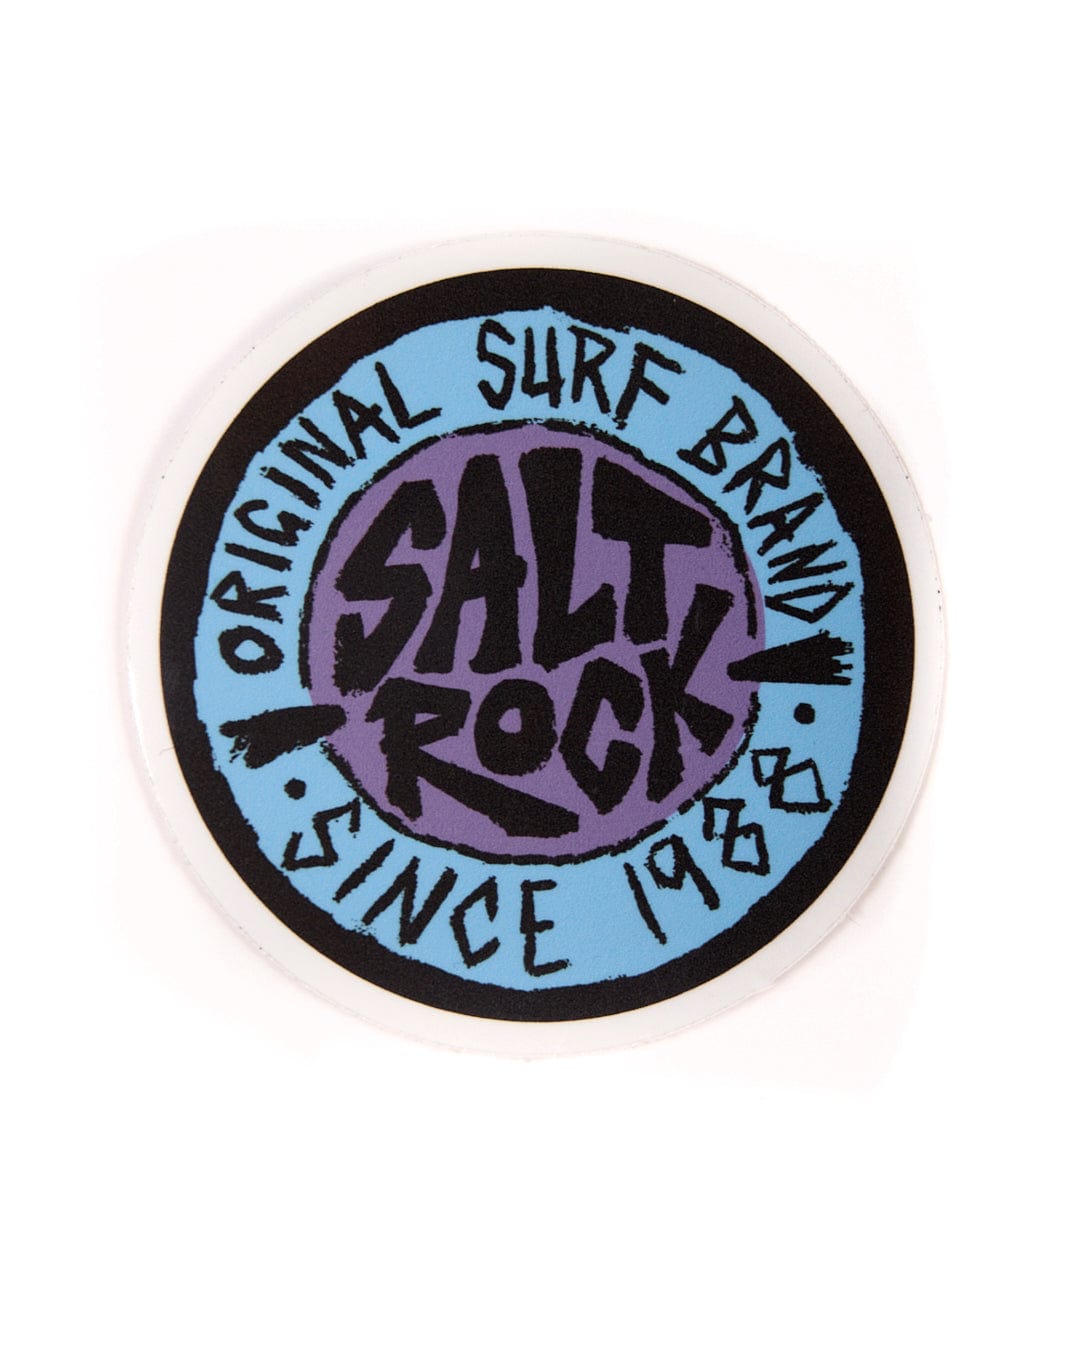 The SR Original Sticker logo is shown on a white background, capturing the spirit of adventure.